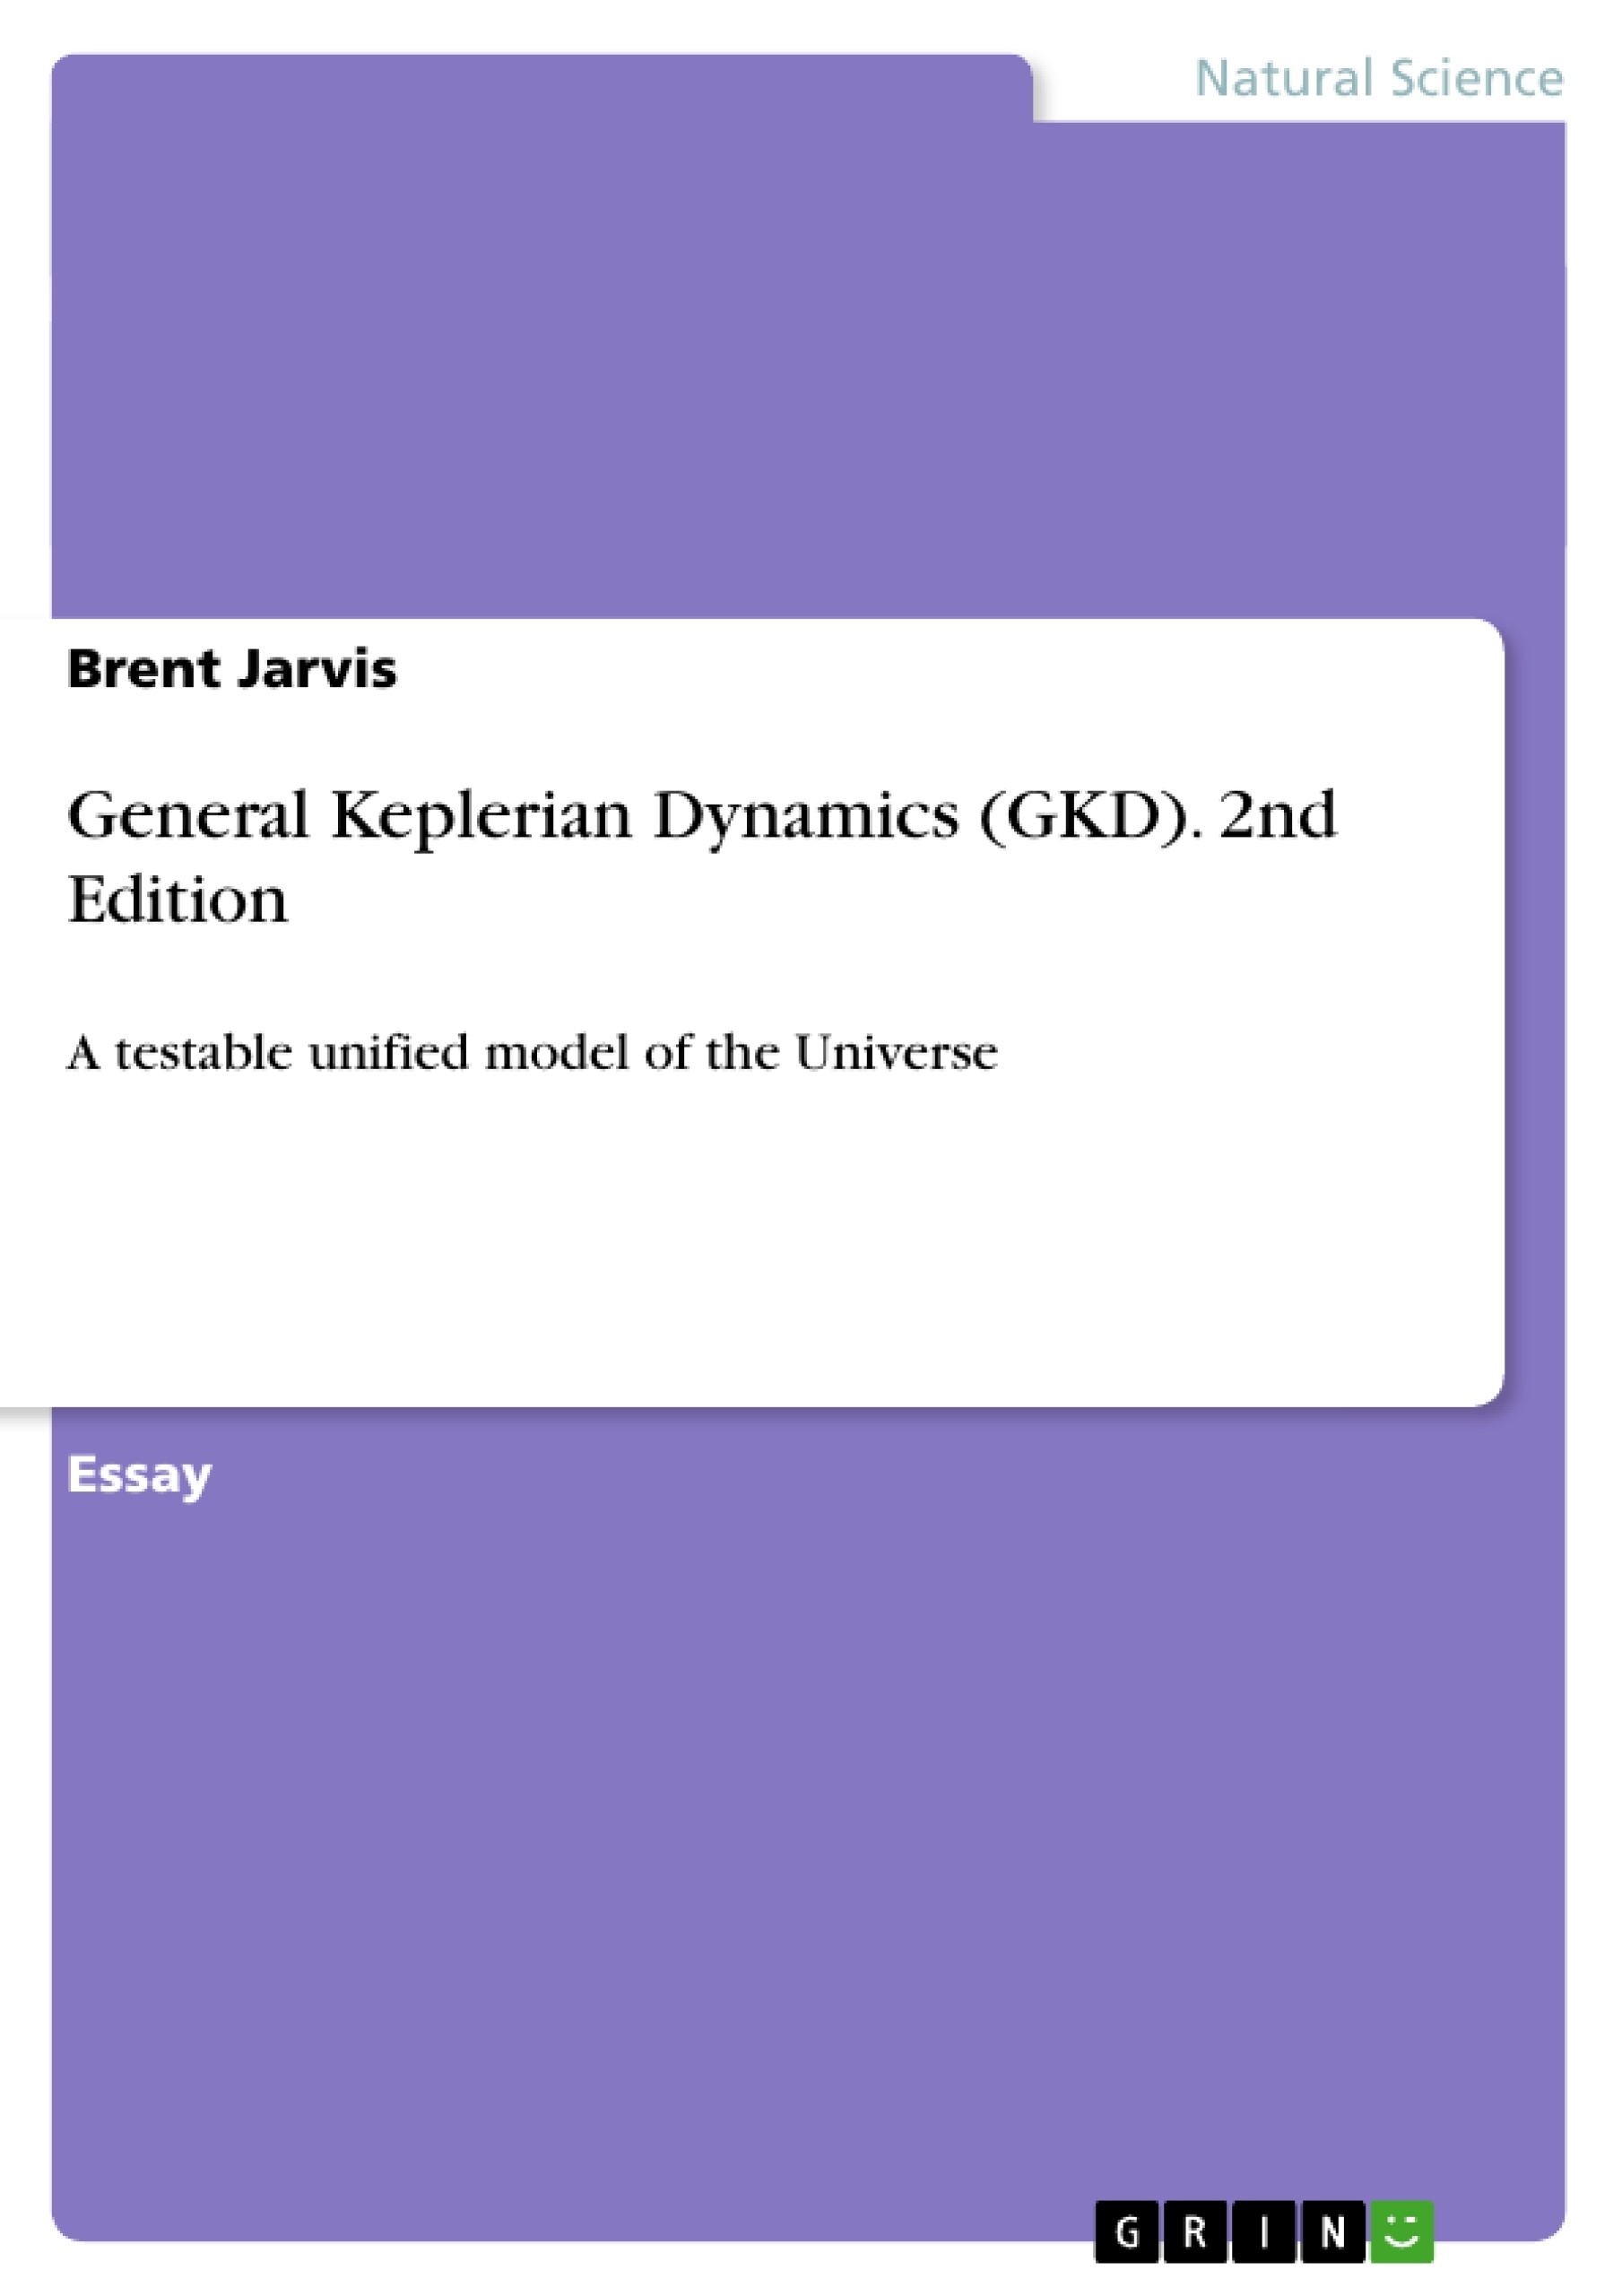 Título: General Keplerian Dynamics (GKD). 2nd Edition